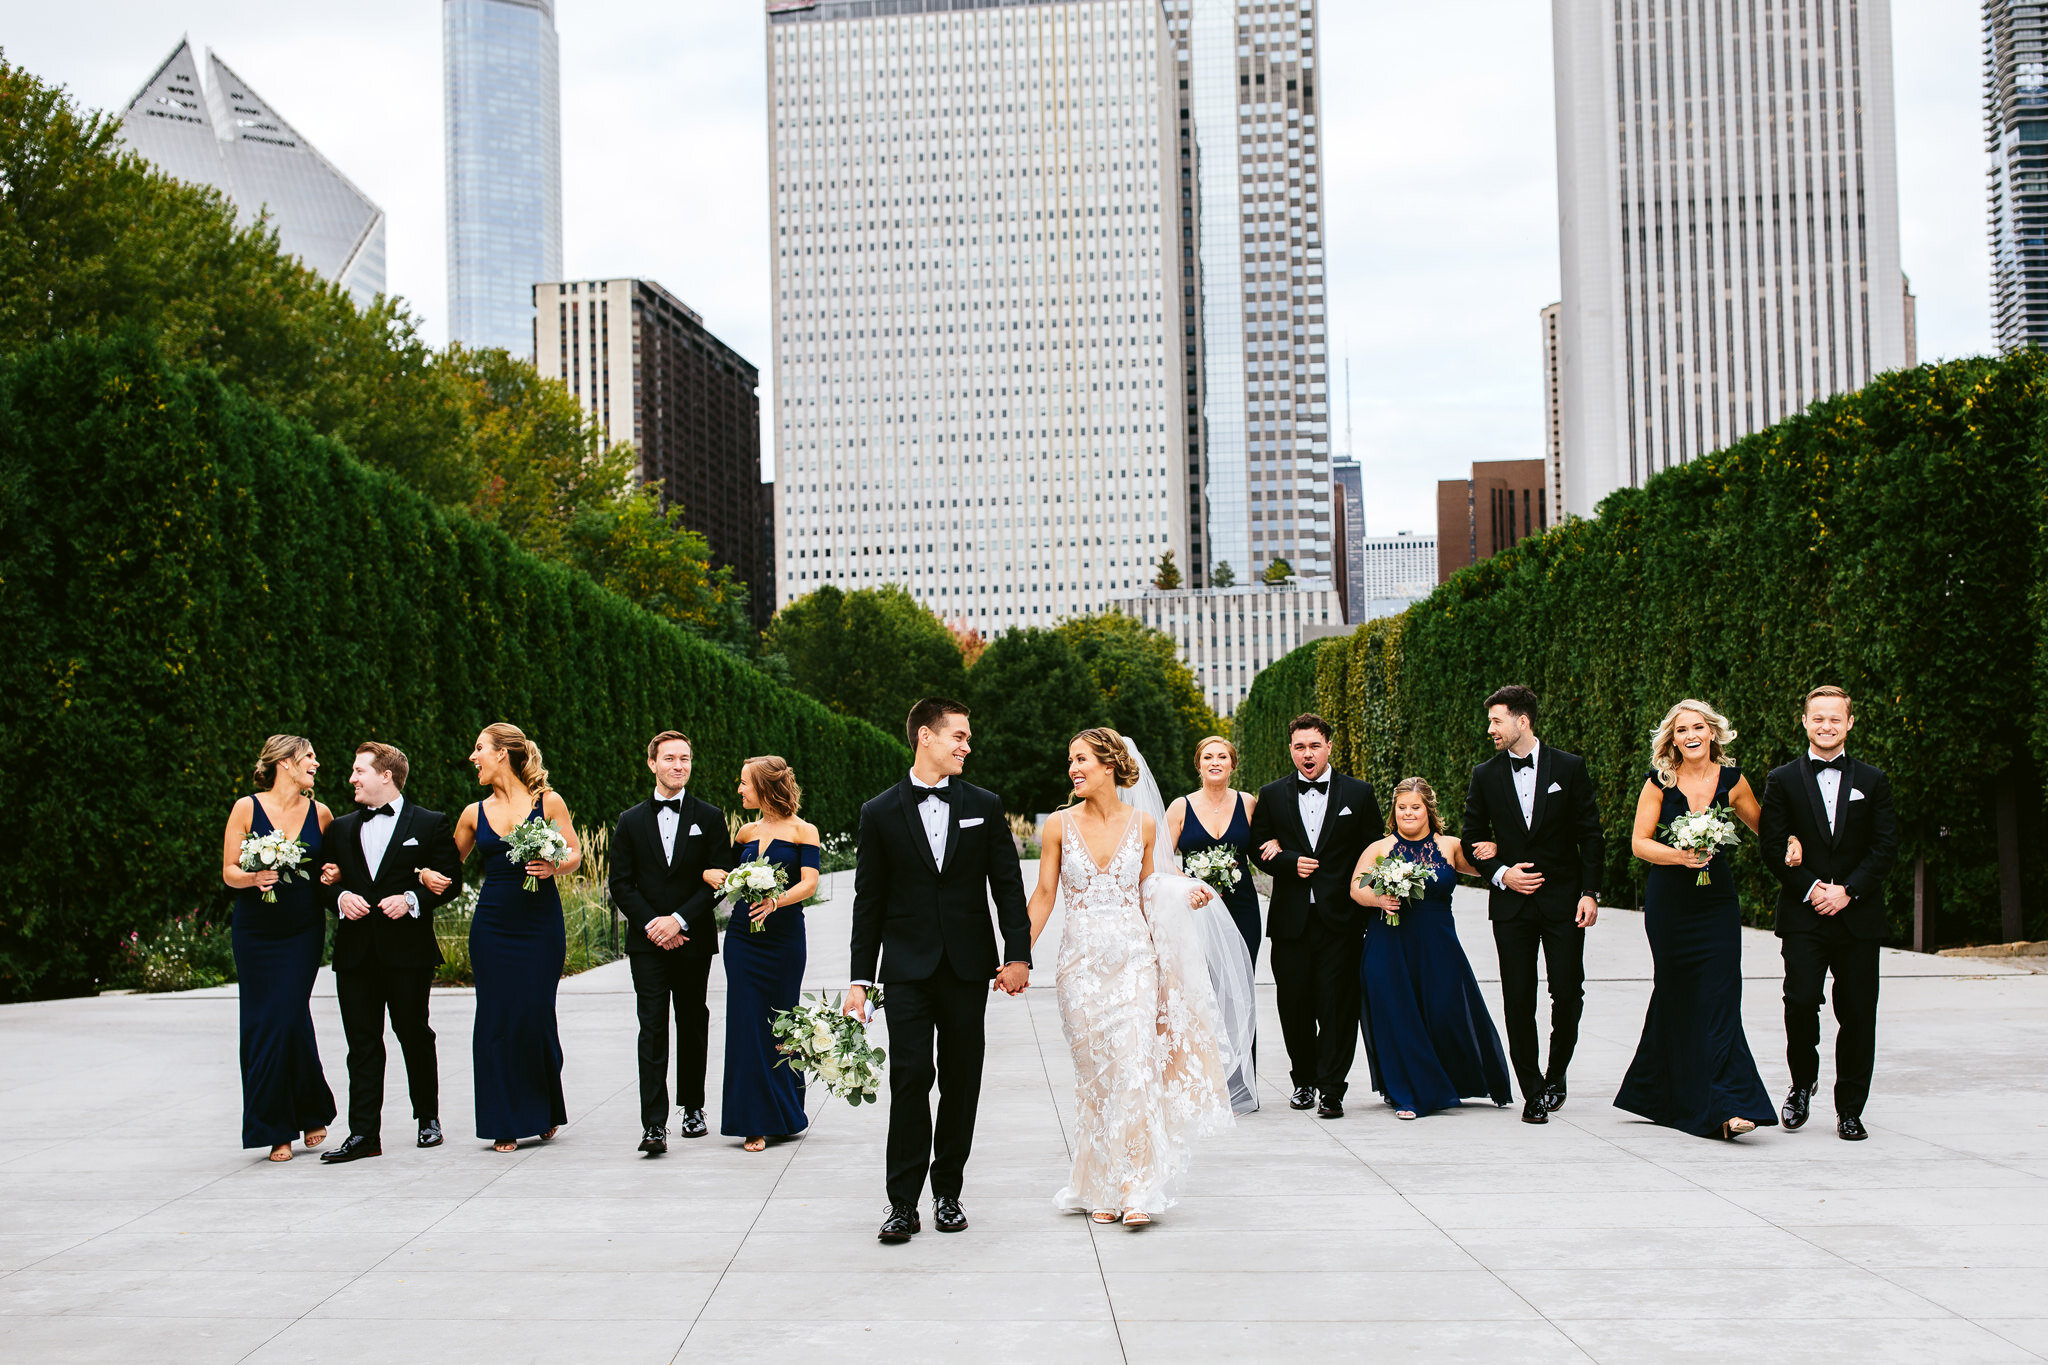 Nicodem-Creative-Chicago-Wedding-Photography-Videography-Inspira